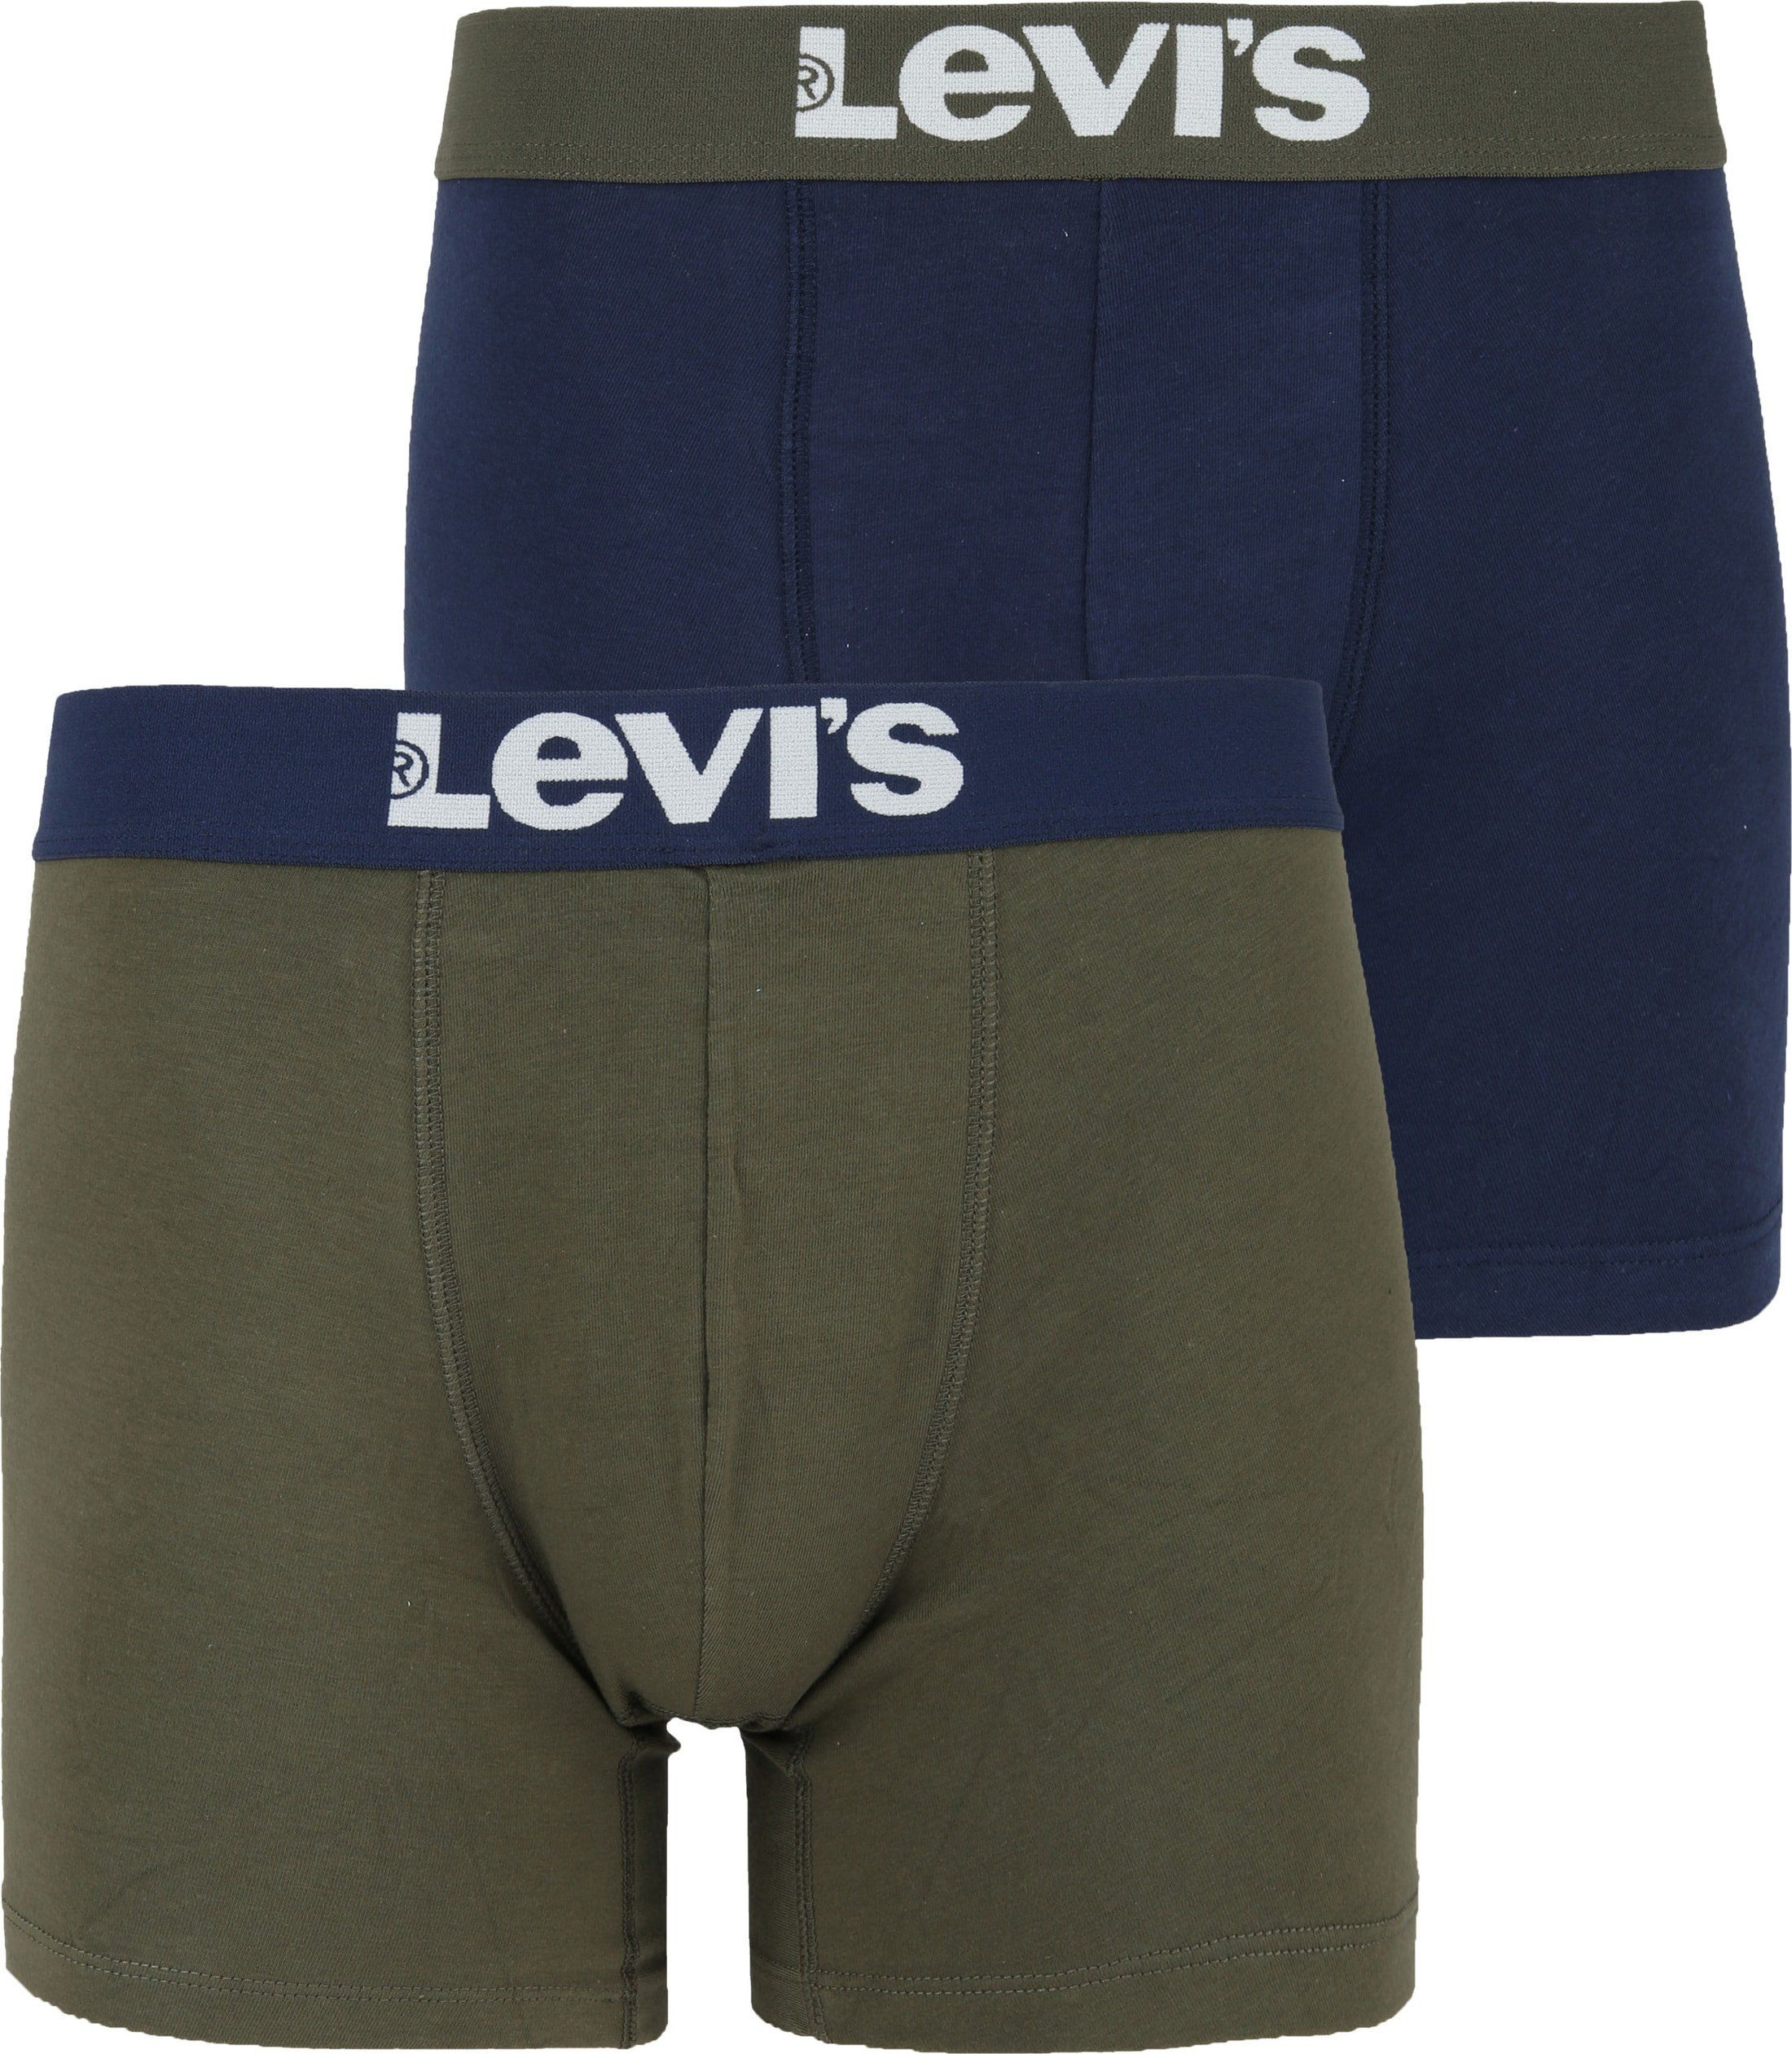 Levi's Boxershorts 2-Pack  Navy Khaki Dark Blue Blue size S